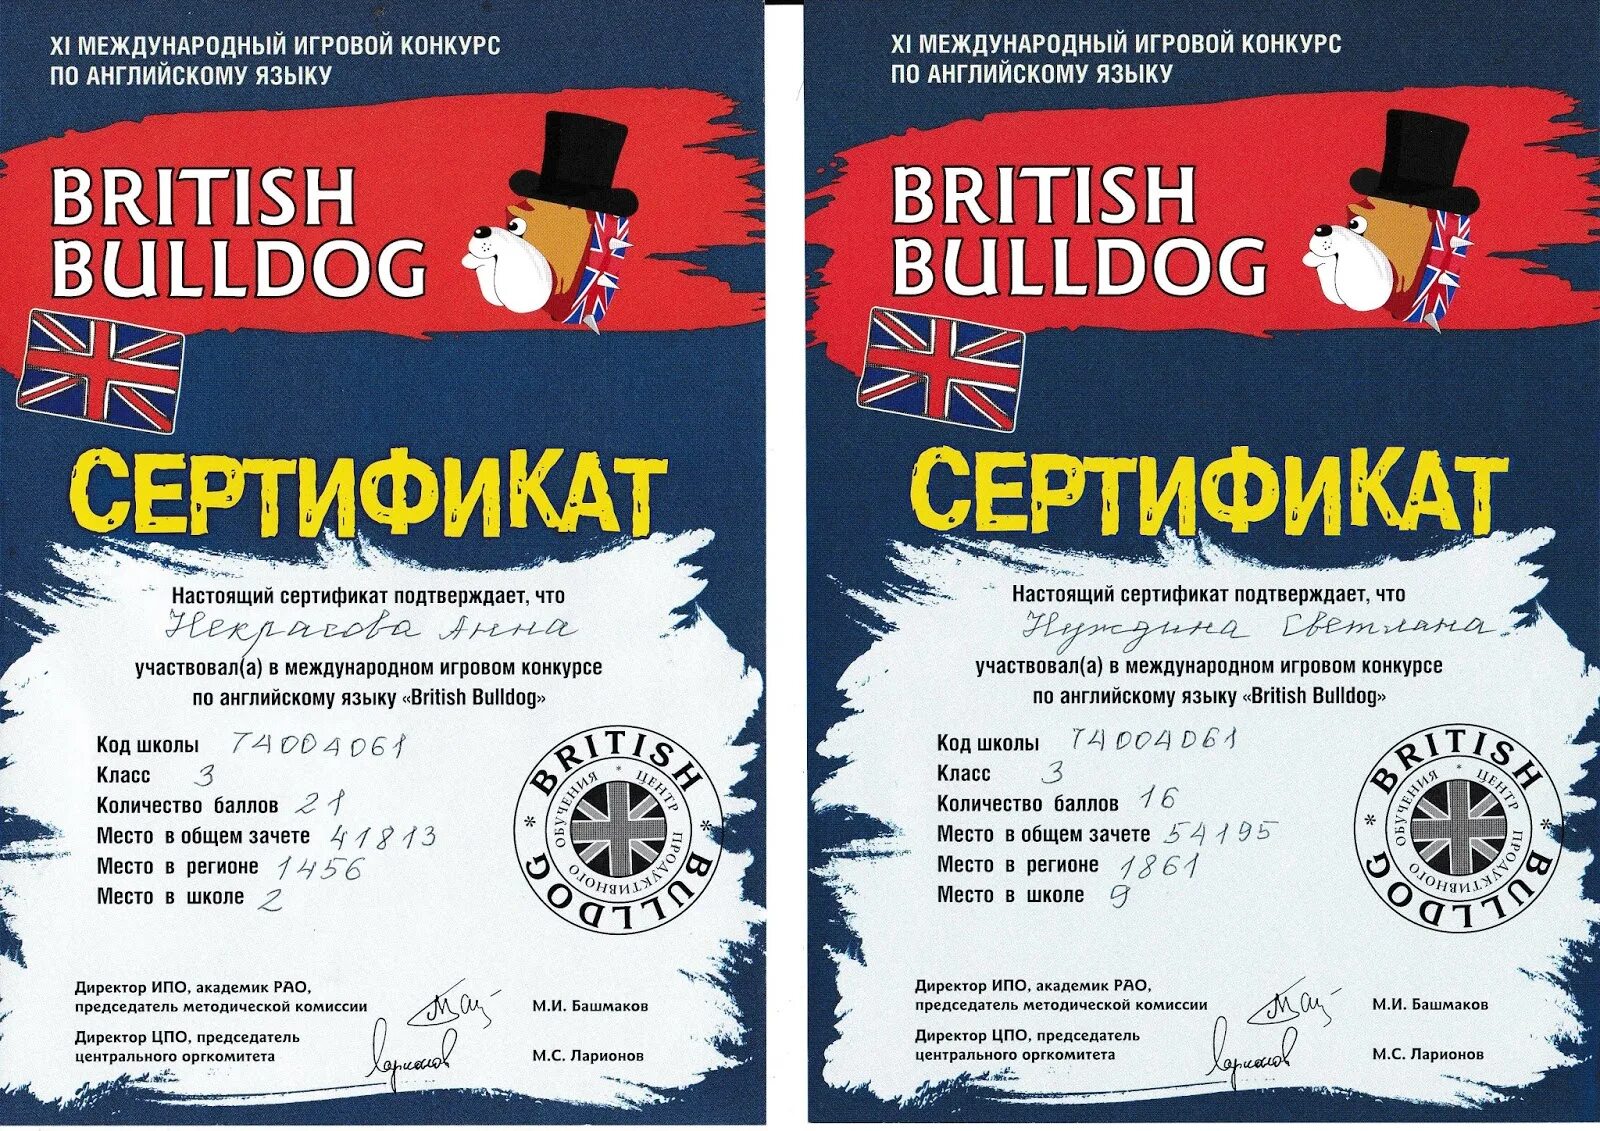 Сертификаты рич. Бритиш бульдог сертификаты 2021. British Bulldog сертификат. Британский бульдог грамота.